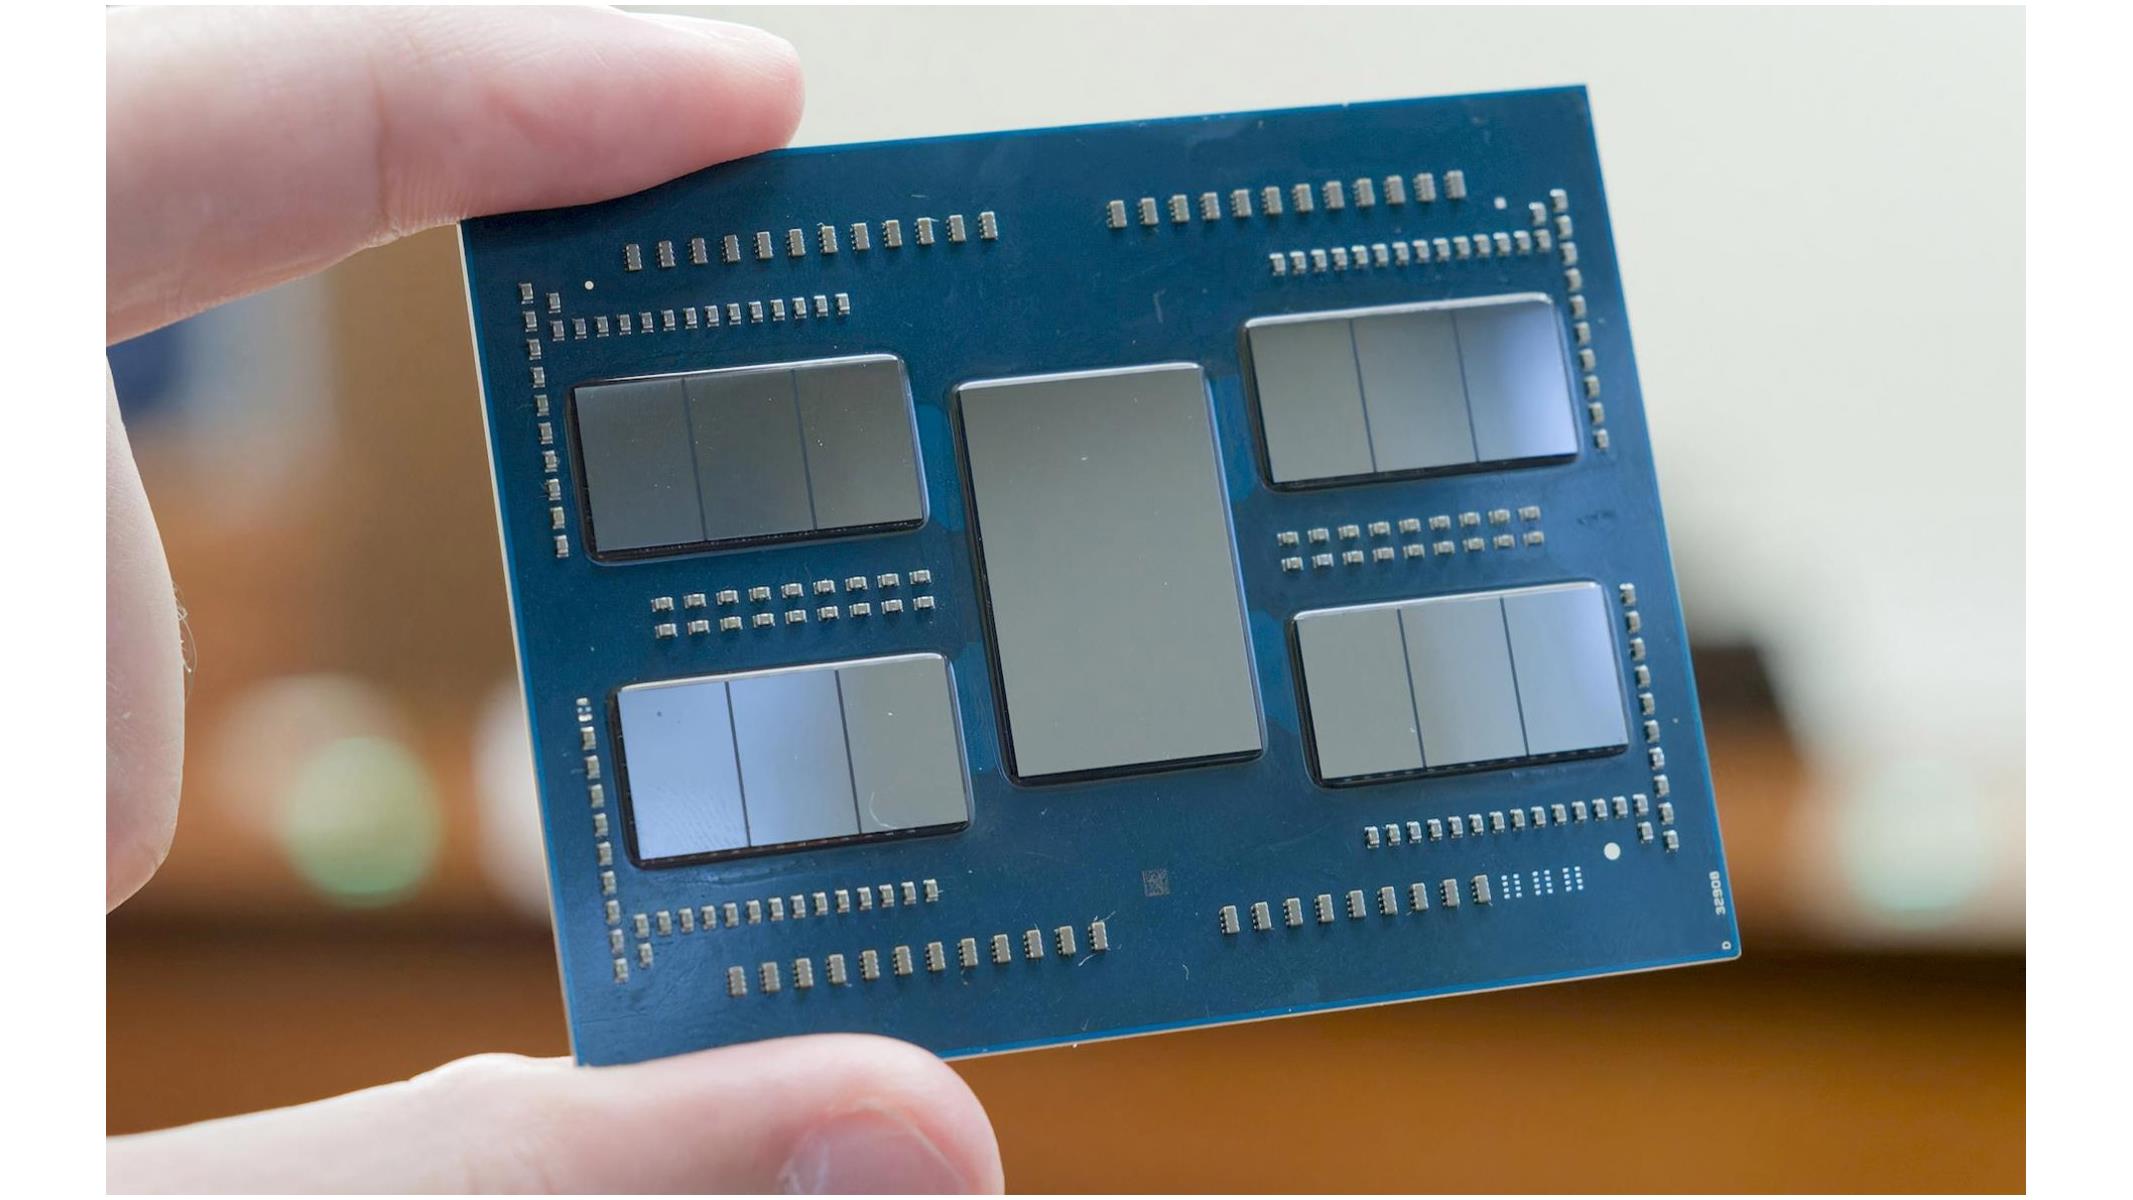 CPU-Z update confirms AMD Ryzen Threadripper PRO 7000WX series, 7995WX with  96 Zen4 cores 